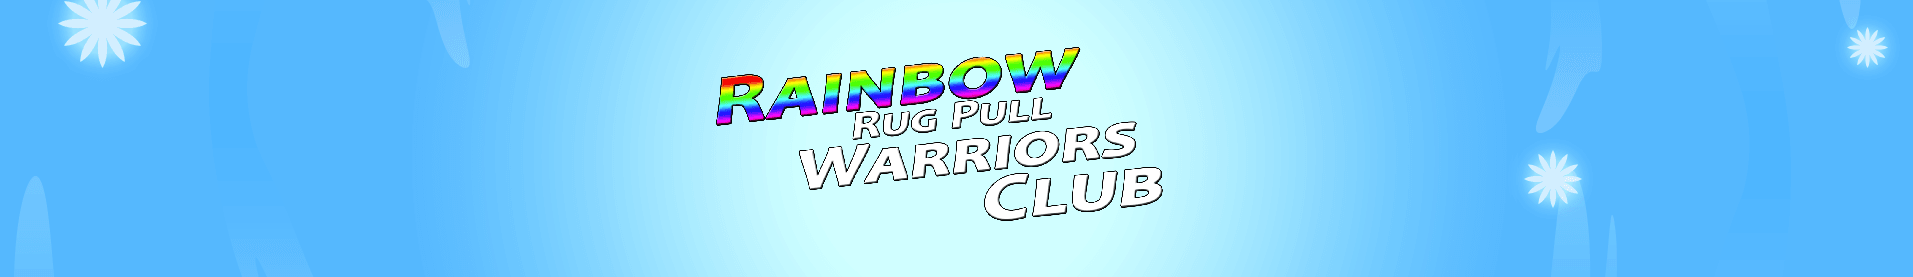 Rainbow_Rug_Pull_Warriors_Club 横幅